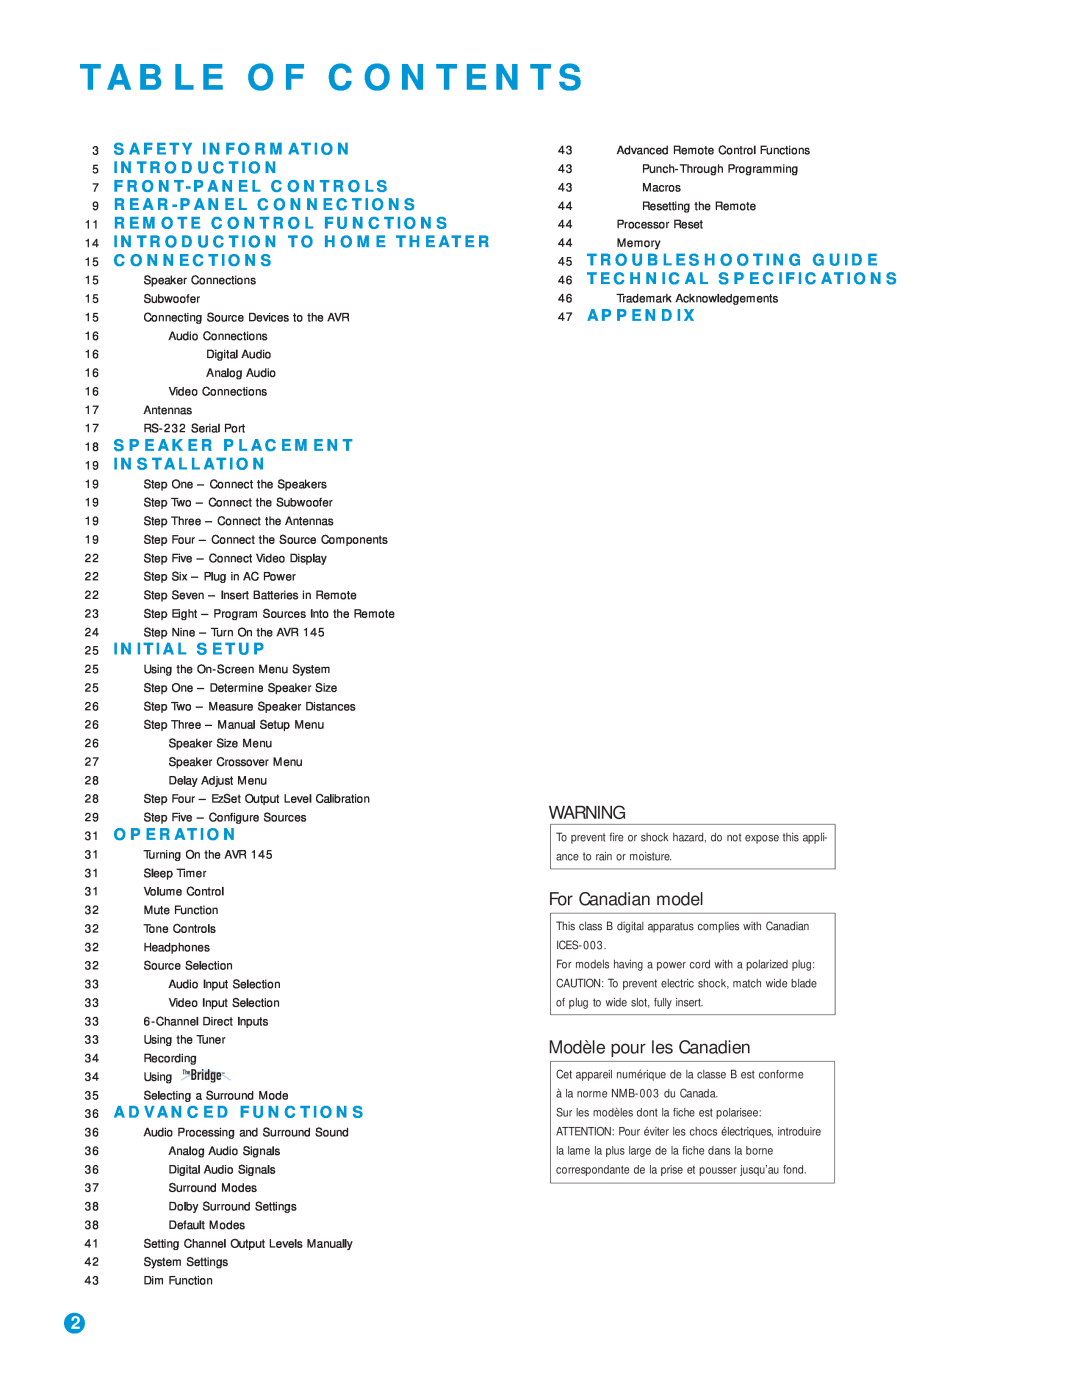 Harman-Kardon AVR 145 owner manual Table Of Contents, For Canadian model, Modèle pour les Canadien 